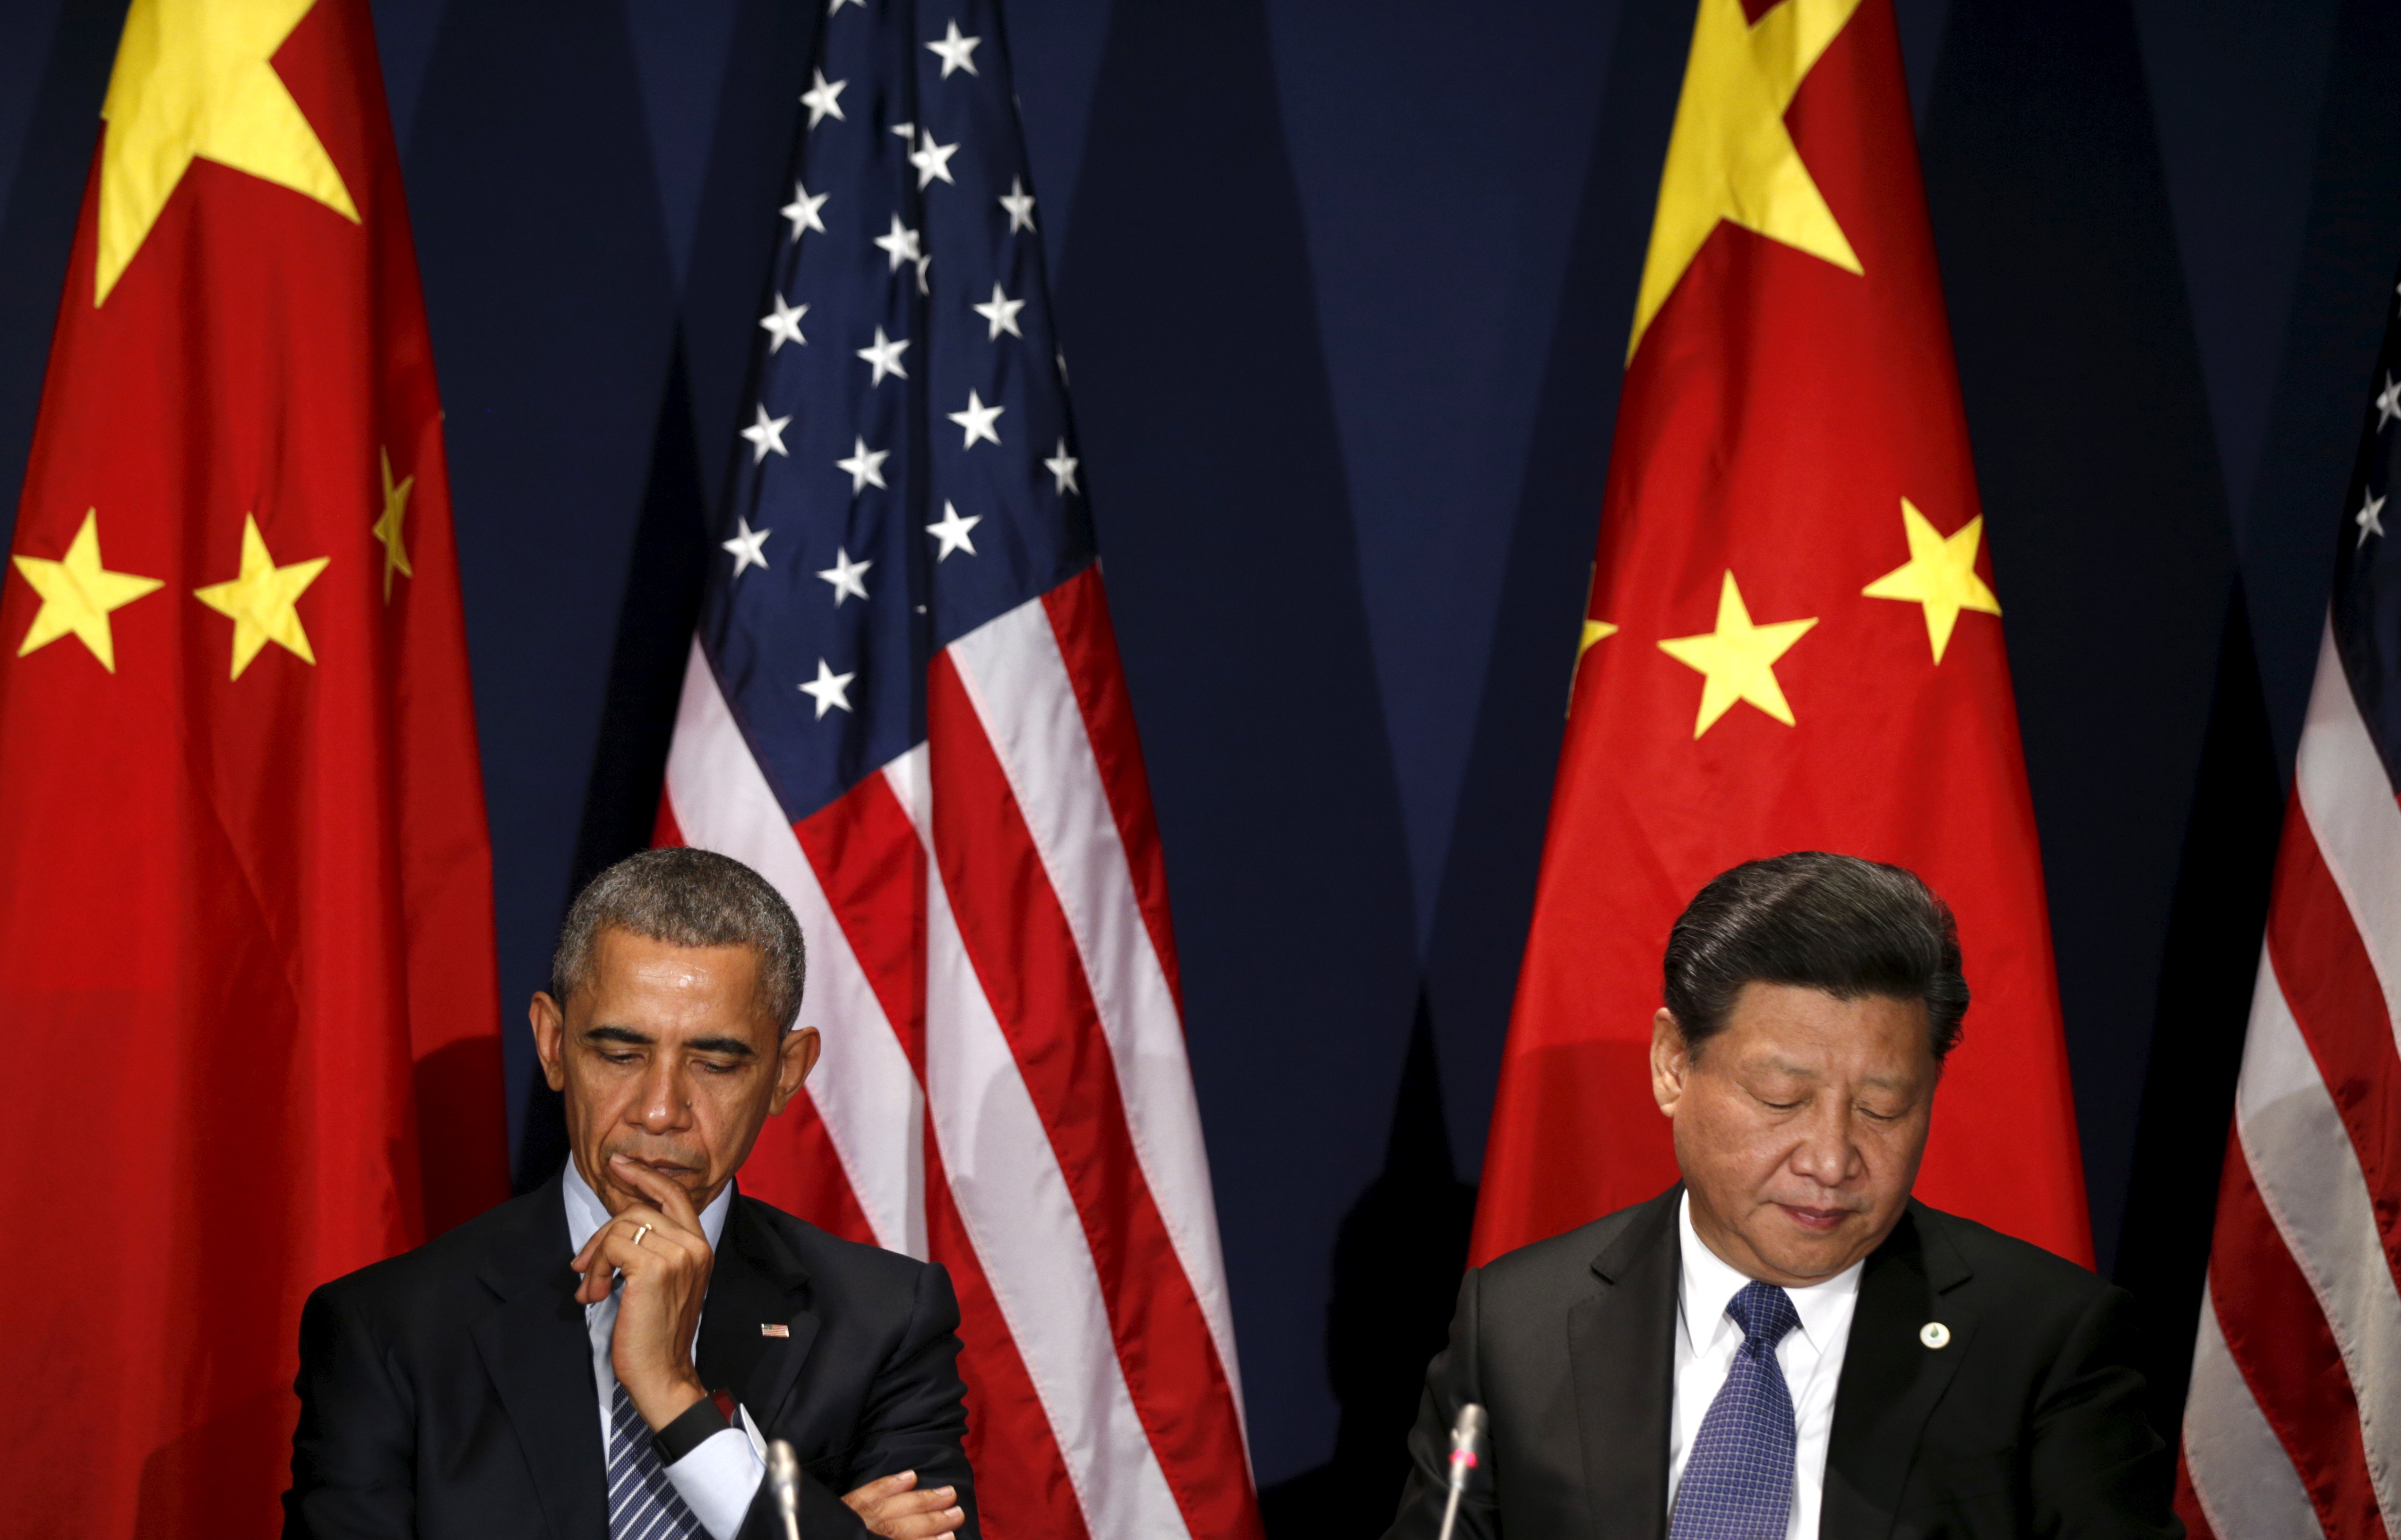 Foton: Reuters. Voormalig president Barack Obama en de Chinese leider Xi Jinping.